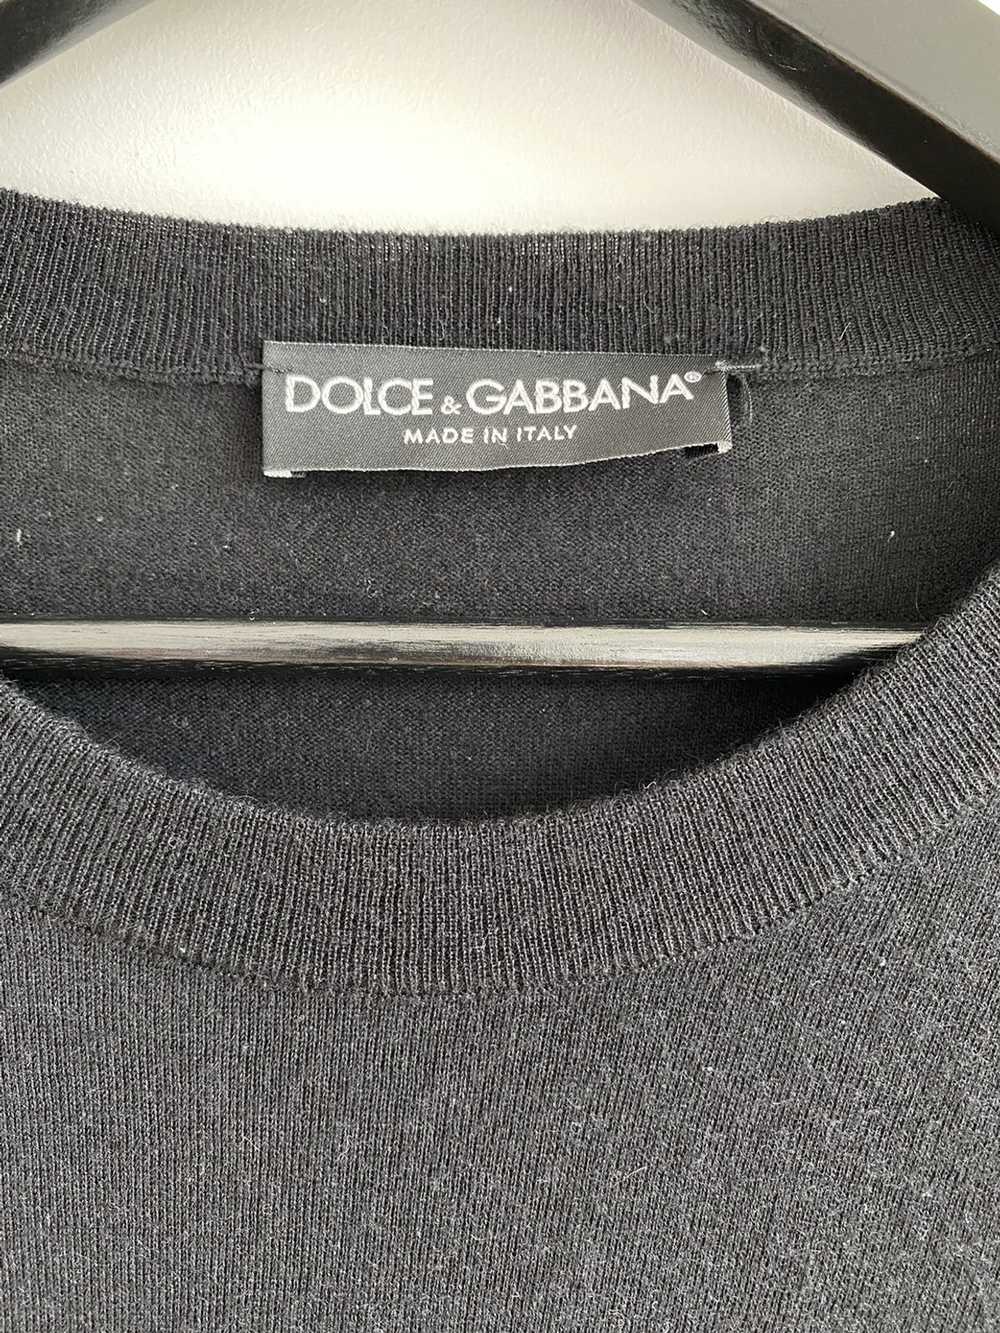 Dolce & Gabbana Cashmere Bee - image 3